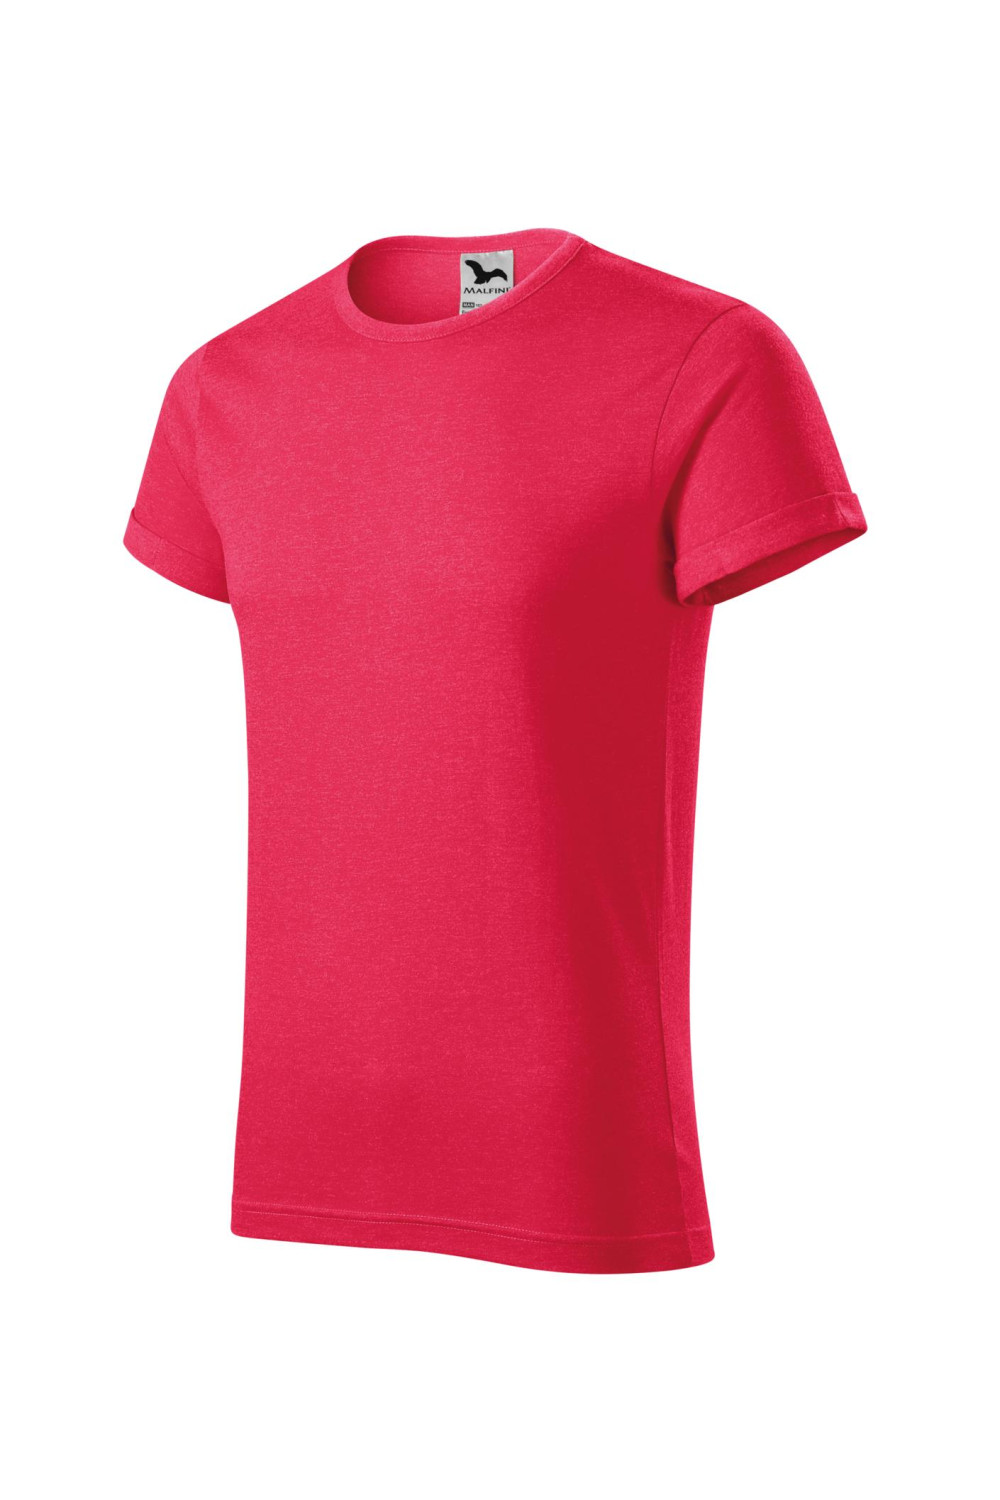 Koszulka męska melanżowa FUSION 163 koszulki / T-shirt czerwony melanż M7